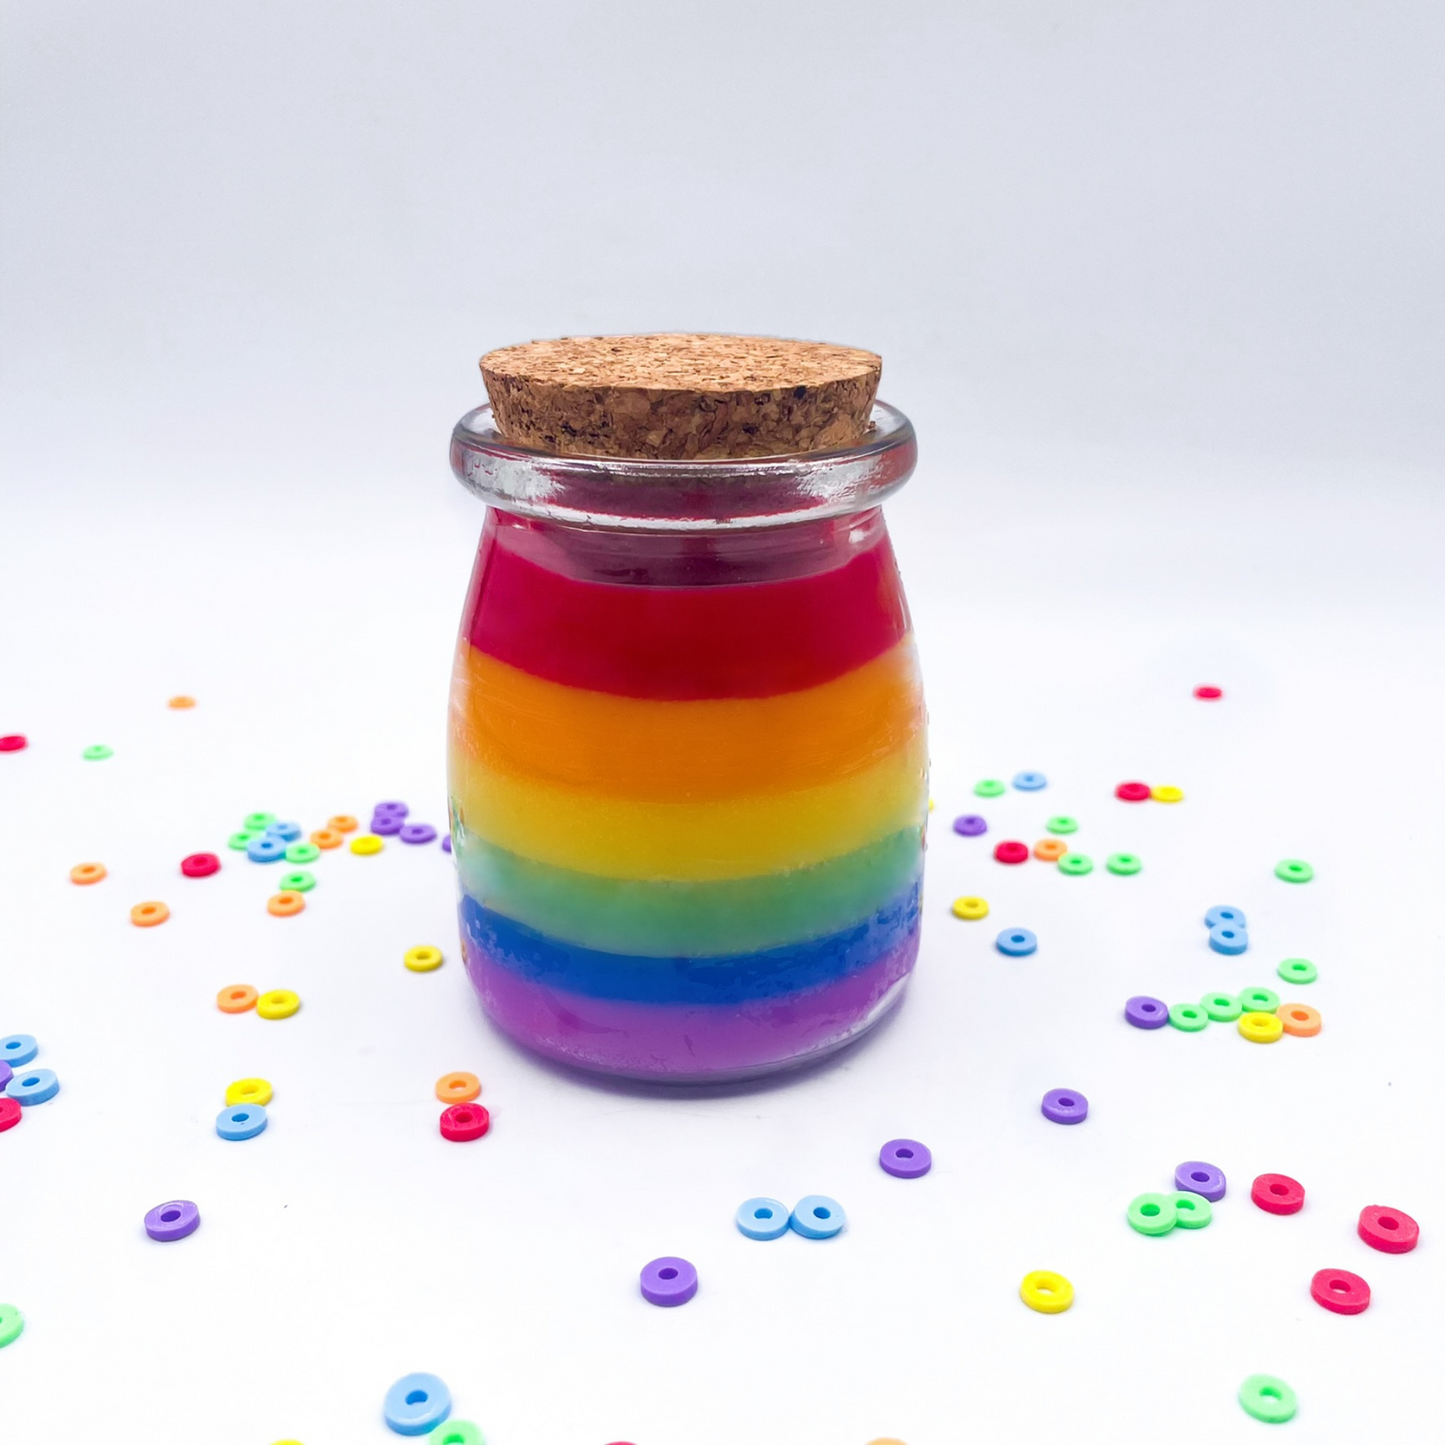 LGBTQ+ pride candle